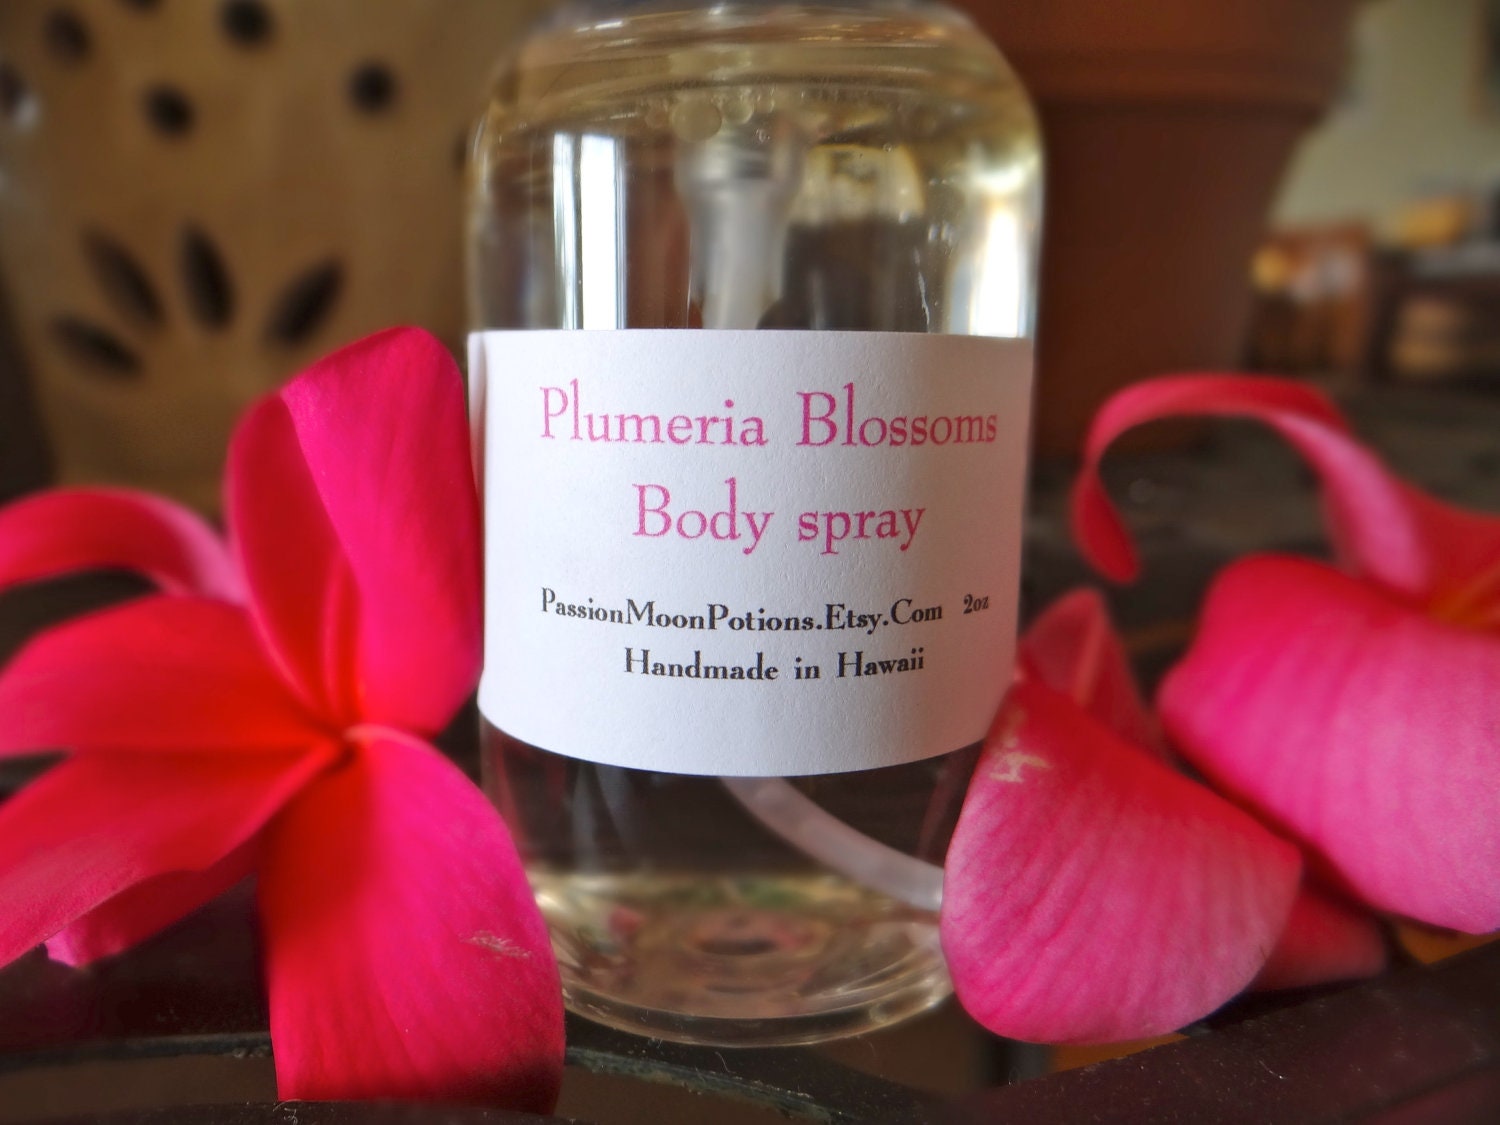 Plumeria Blossoms Room and Body Spray 2oz